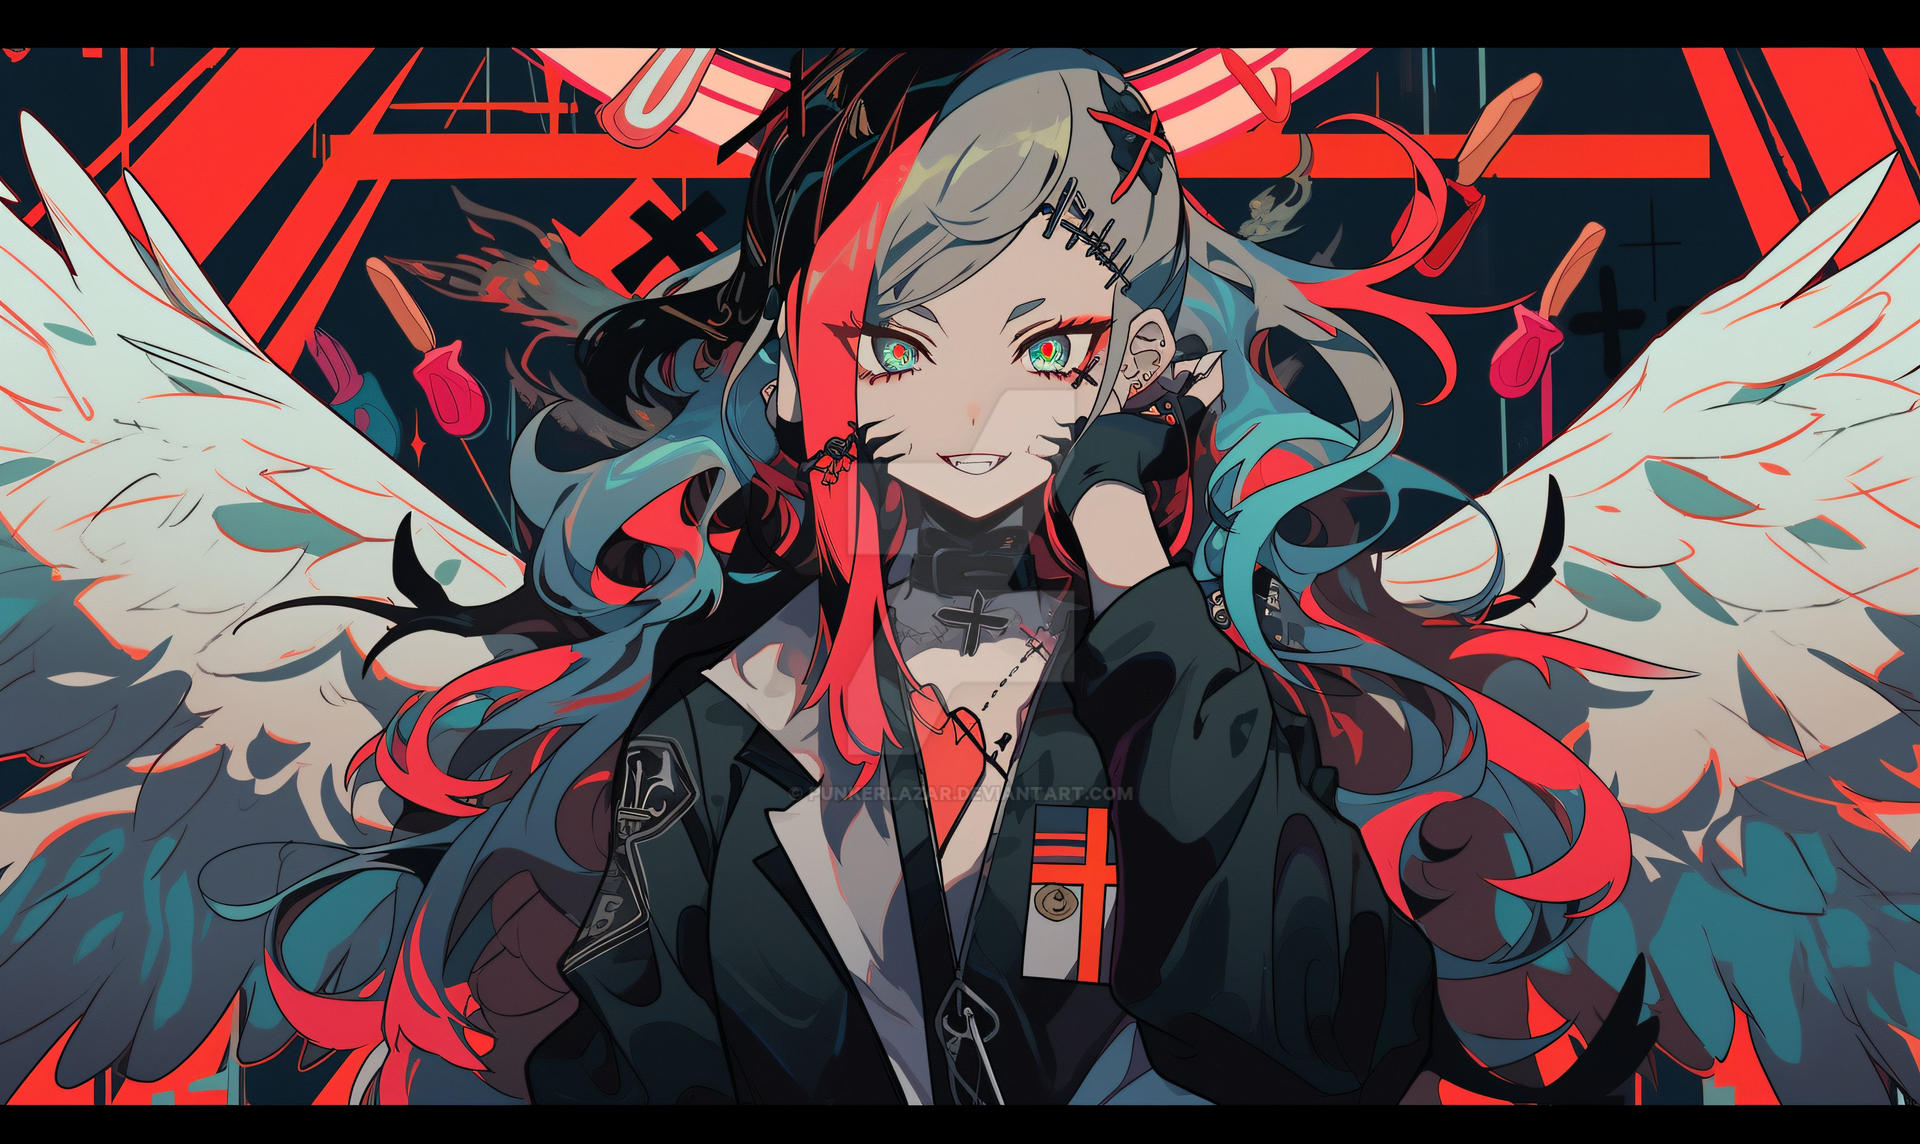 Anime Cyberpunk girl and tiger demon (9) by PunkerLazar on DeviantArt